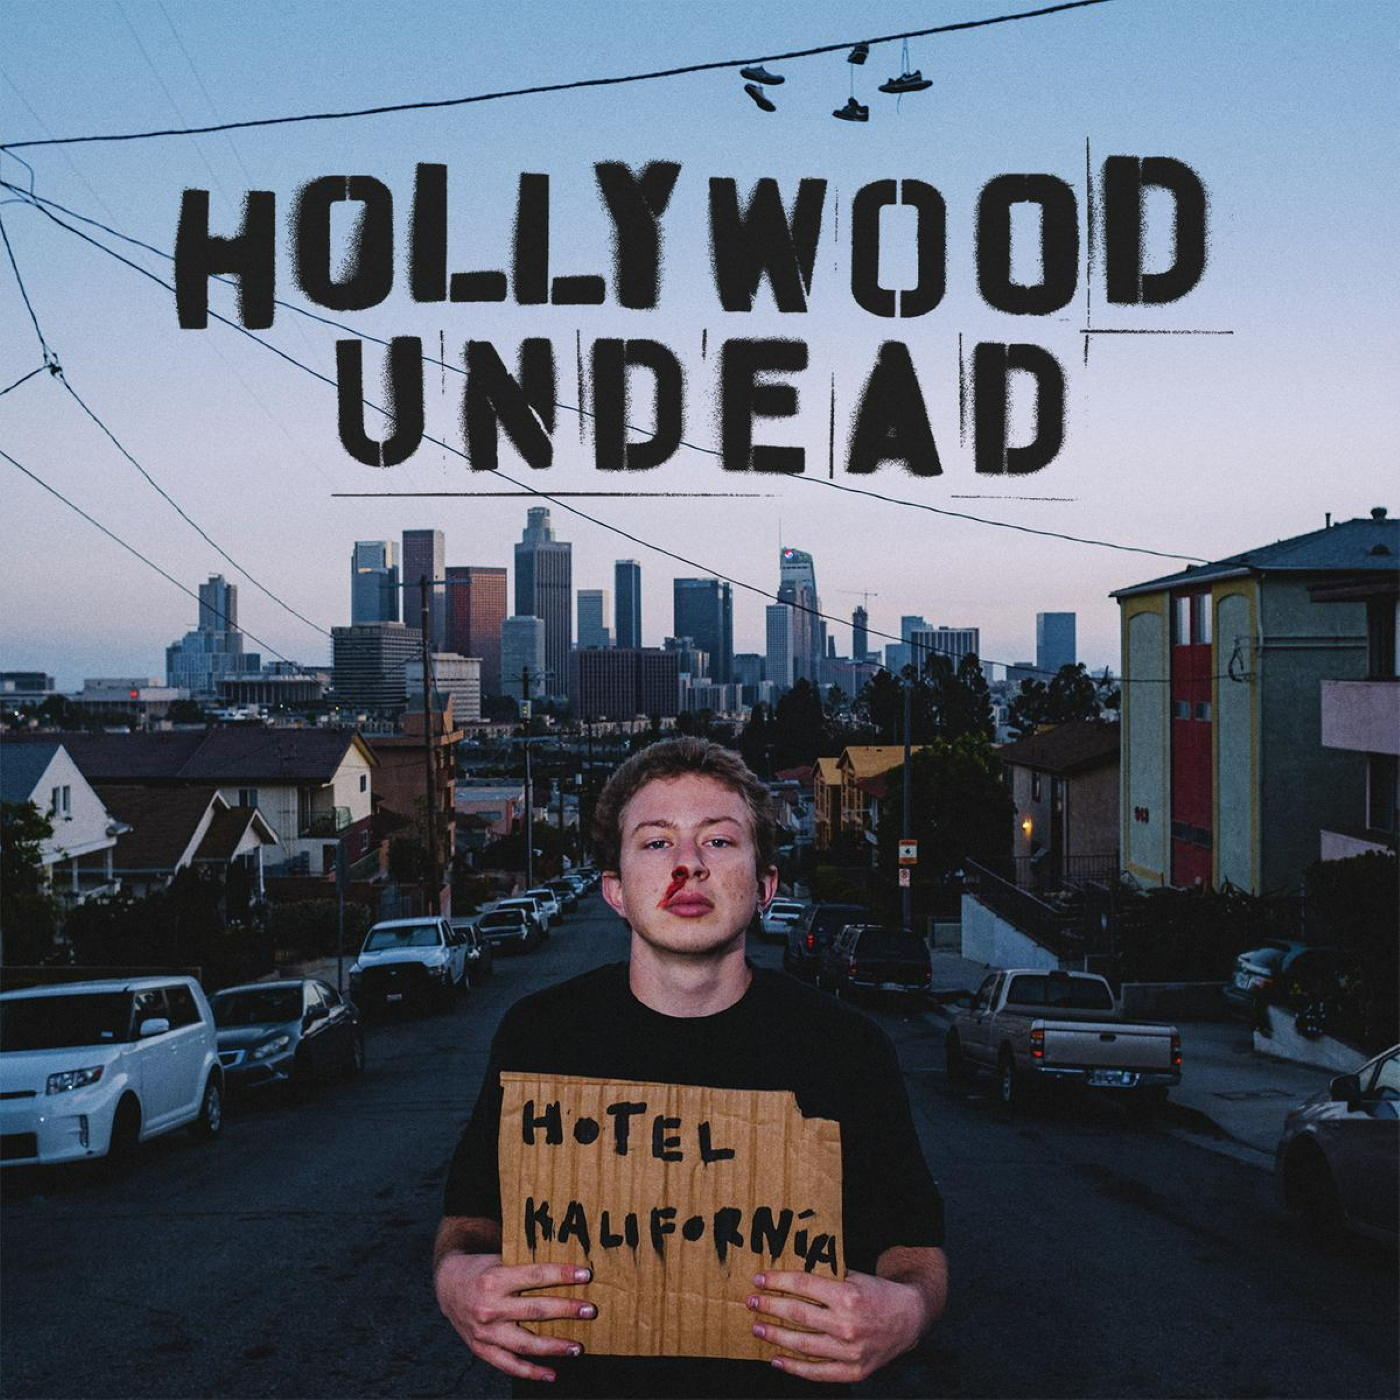 Version) Hollywood - Kalifornia Undead Hotel - (Vinyl) (Deluxe